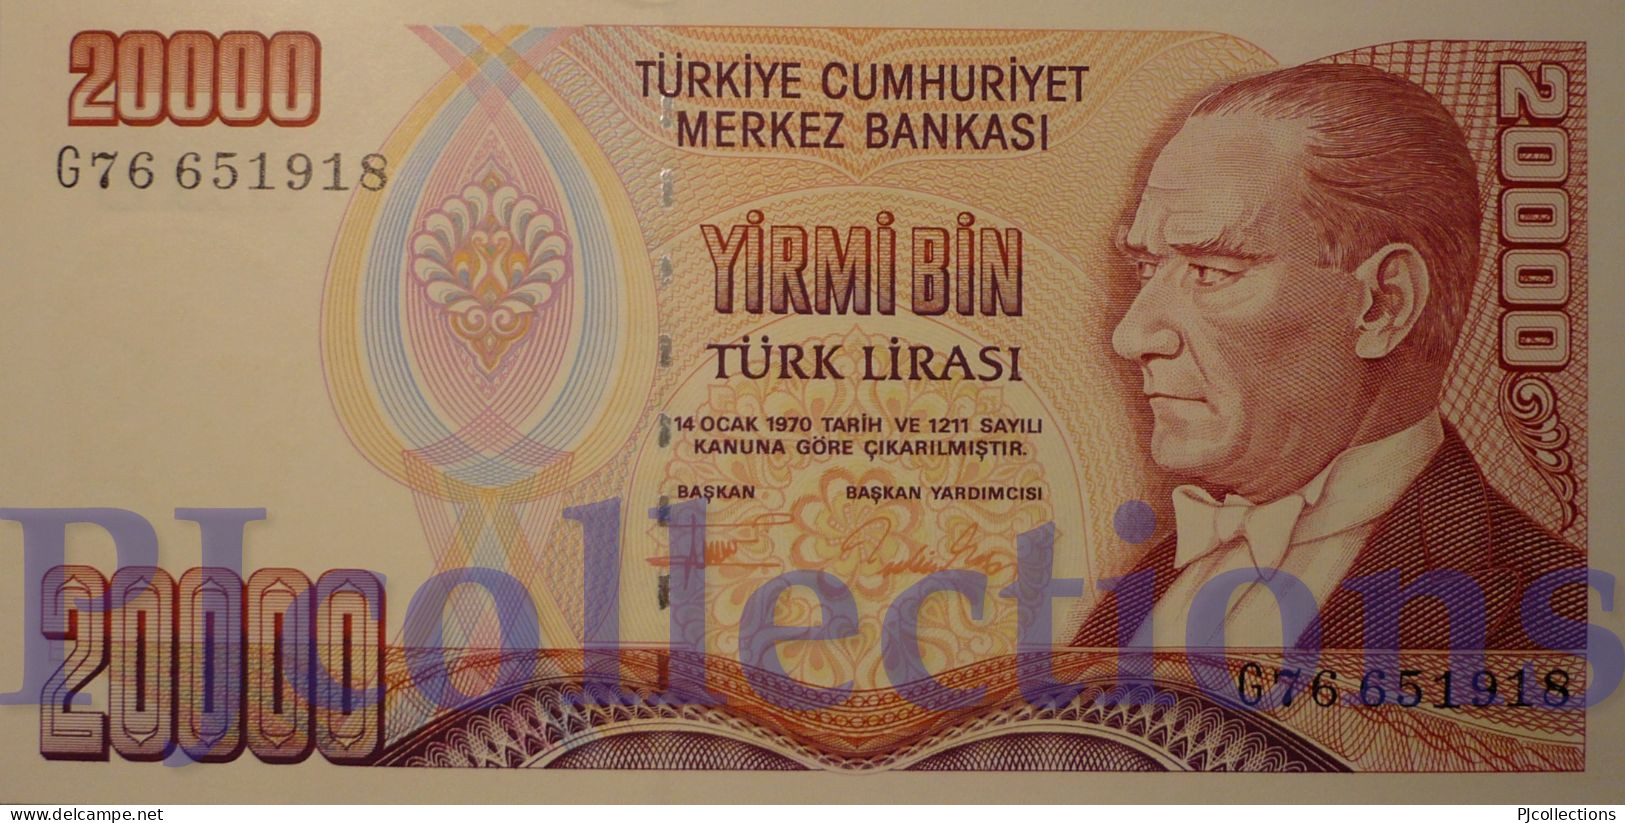 TURKEY 20000 LIRA 1995 PICK 202 UNC - Turquie